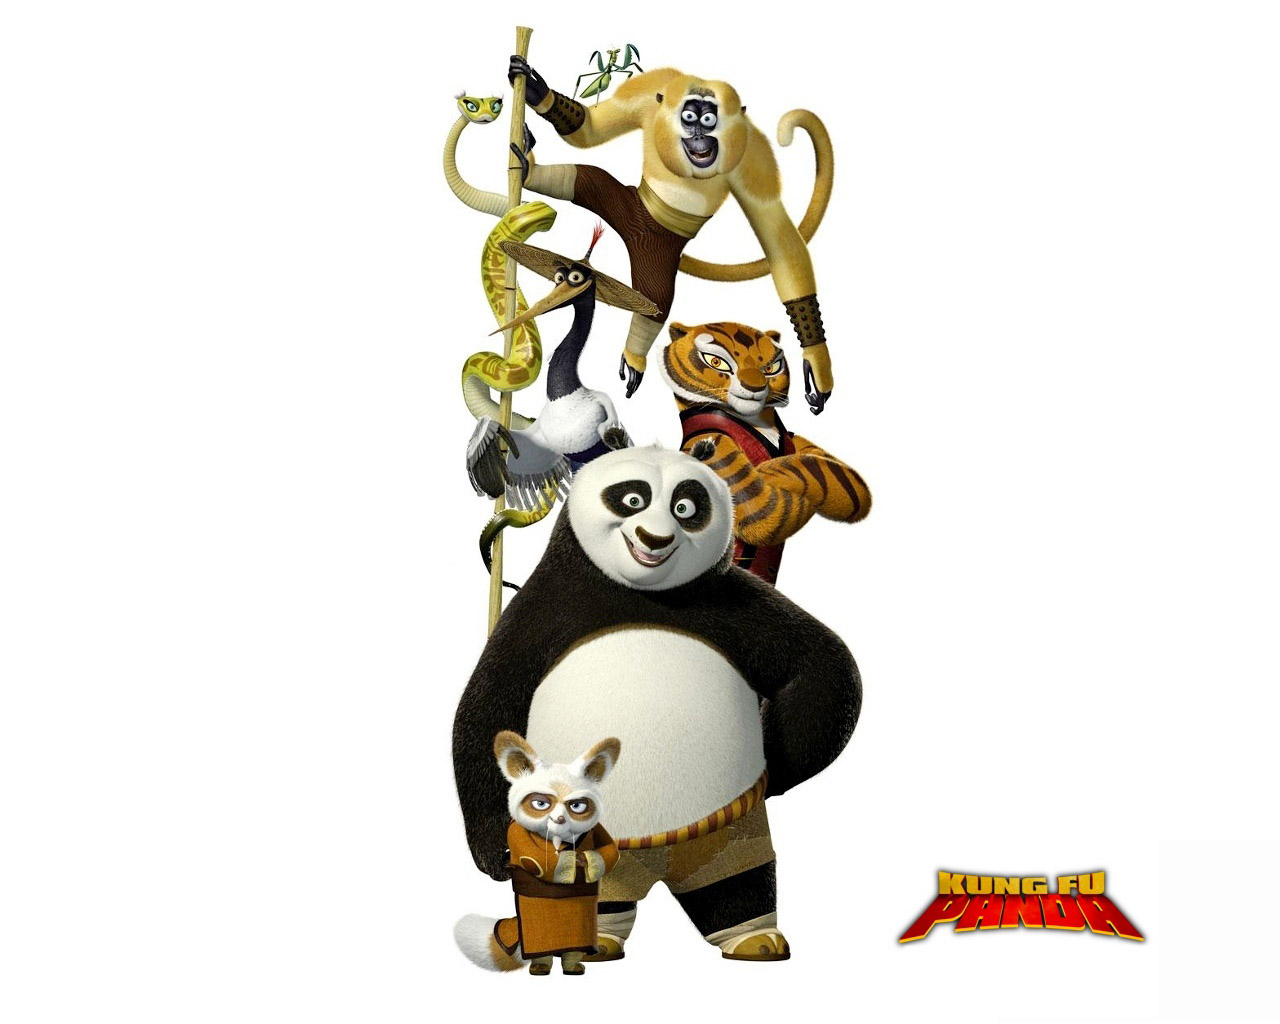 KungFu Panda 3D Animation Wallpapers   HD Wallpapers 80275